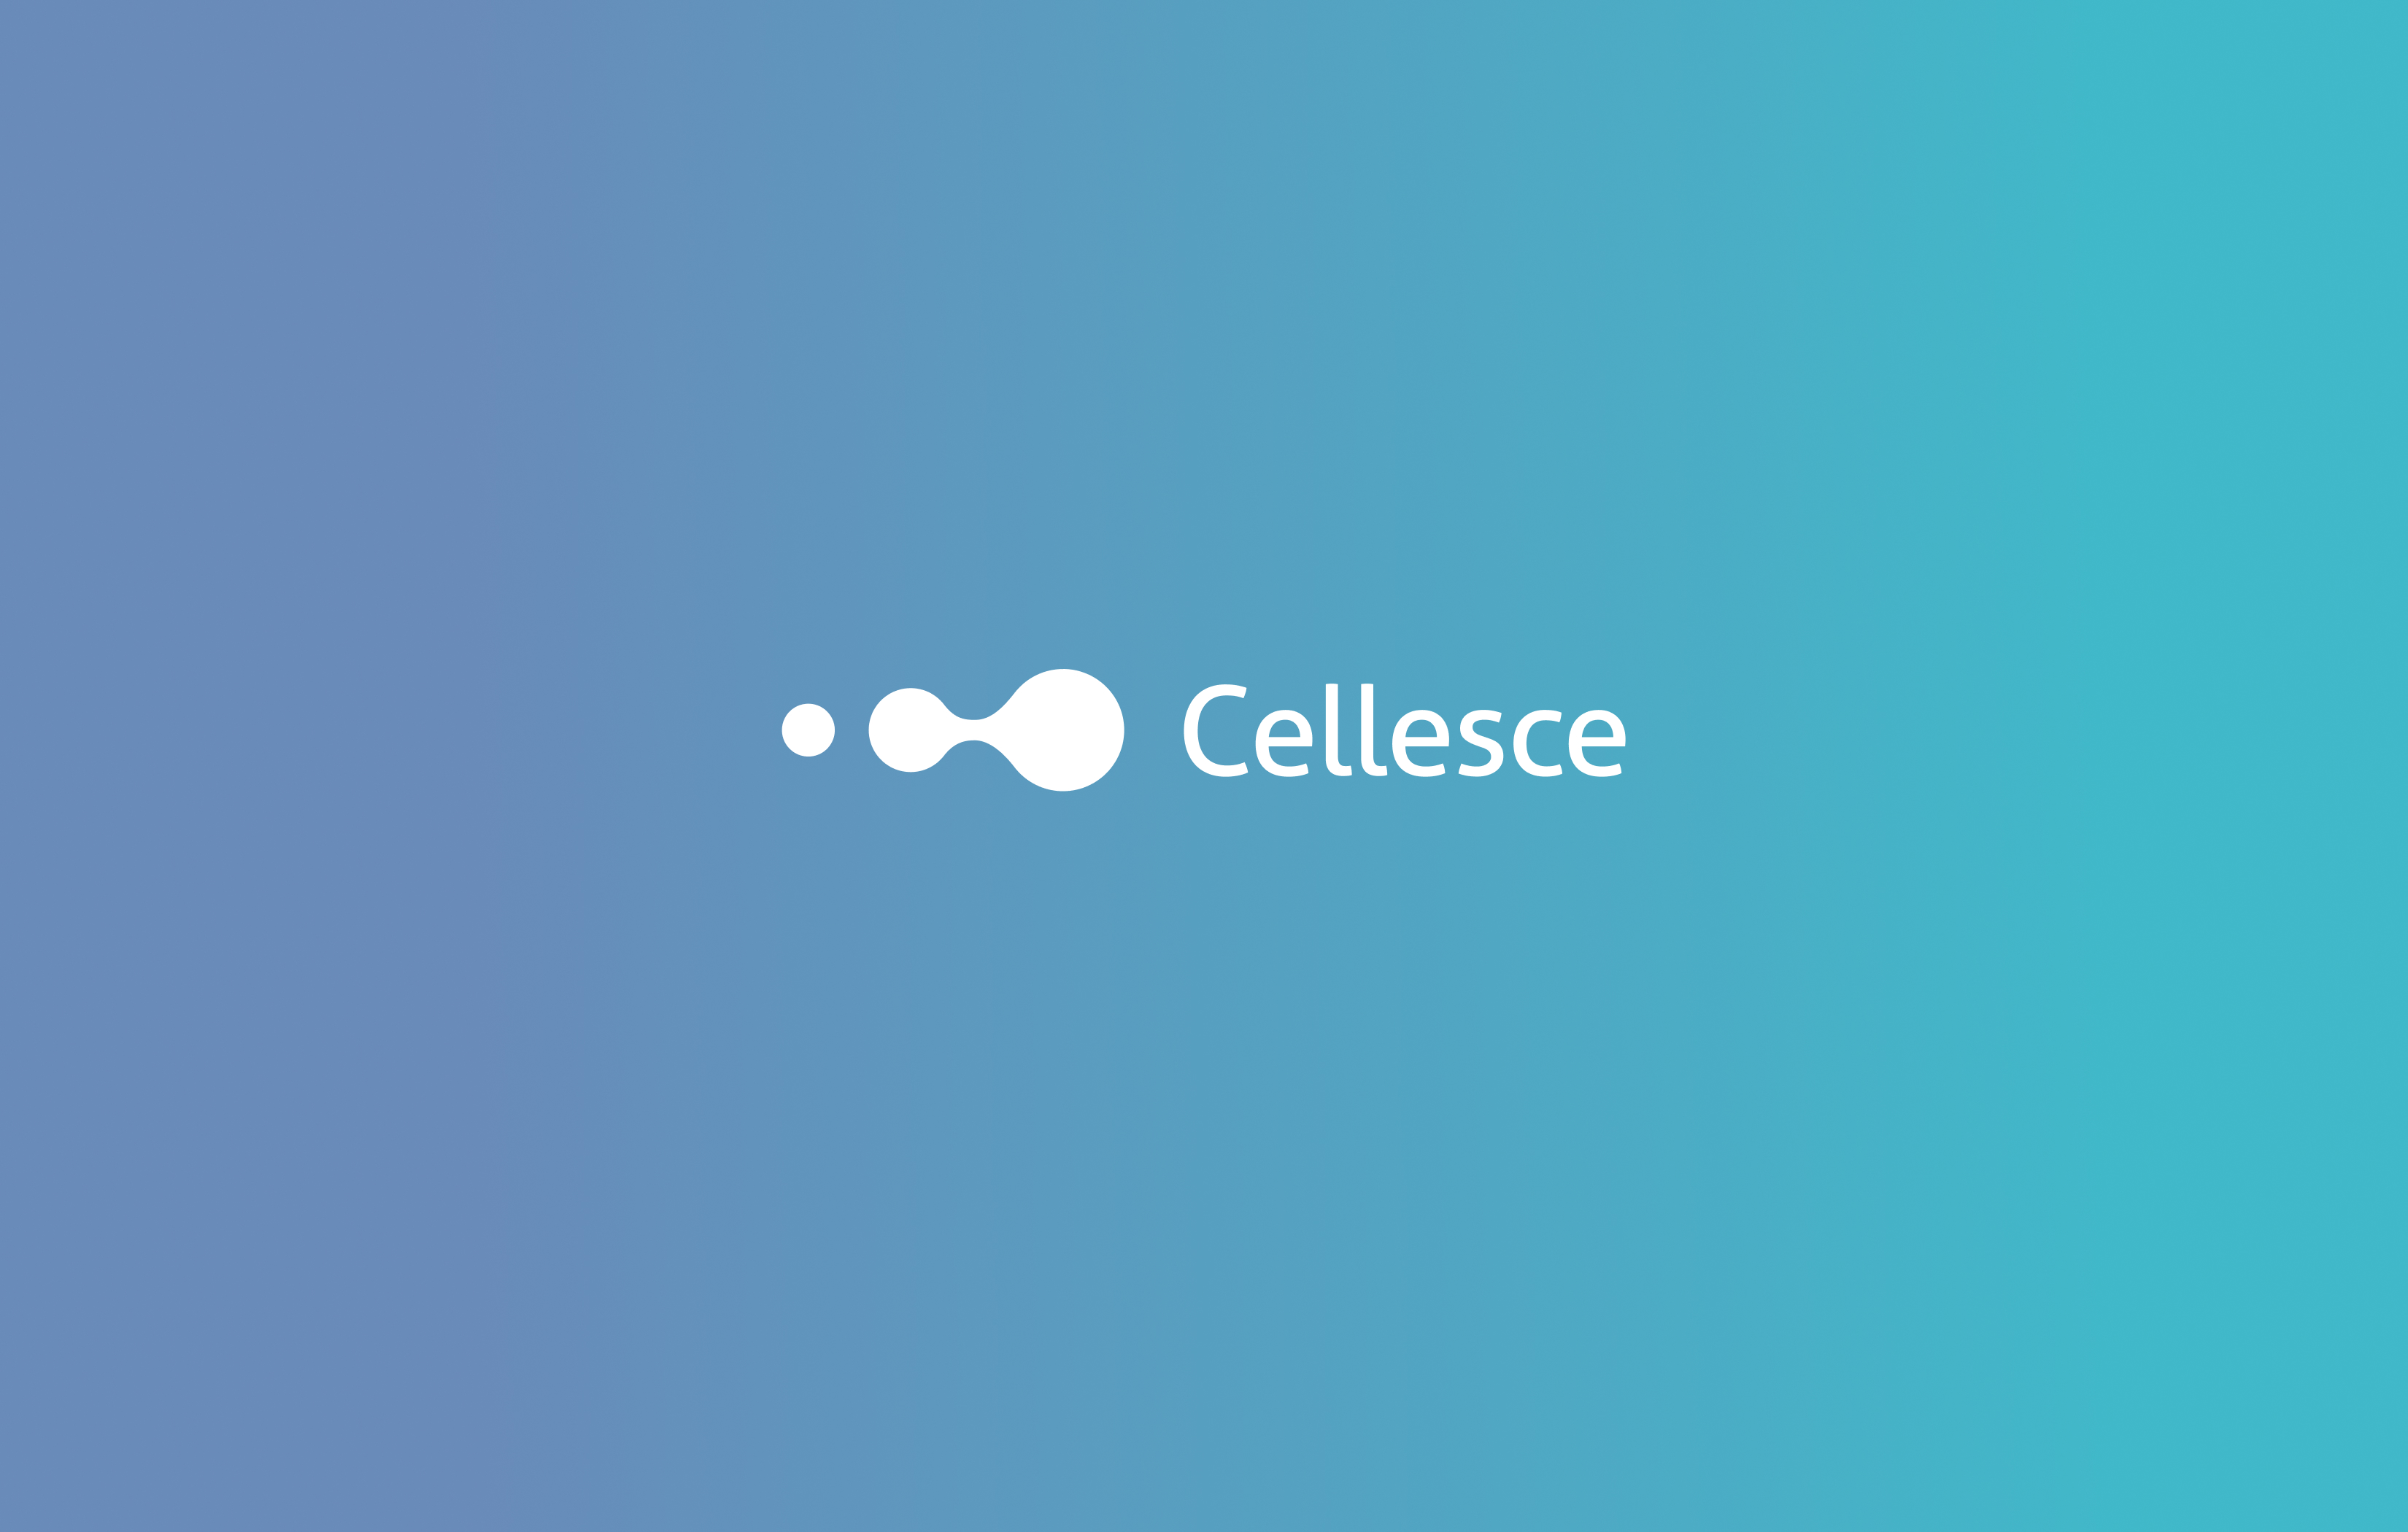 Cellesce brand identity